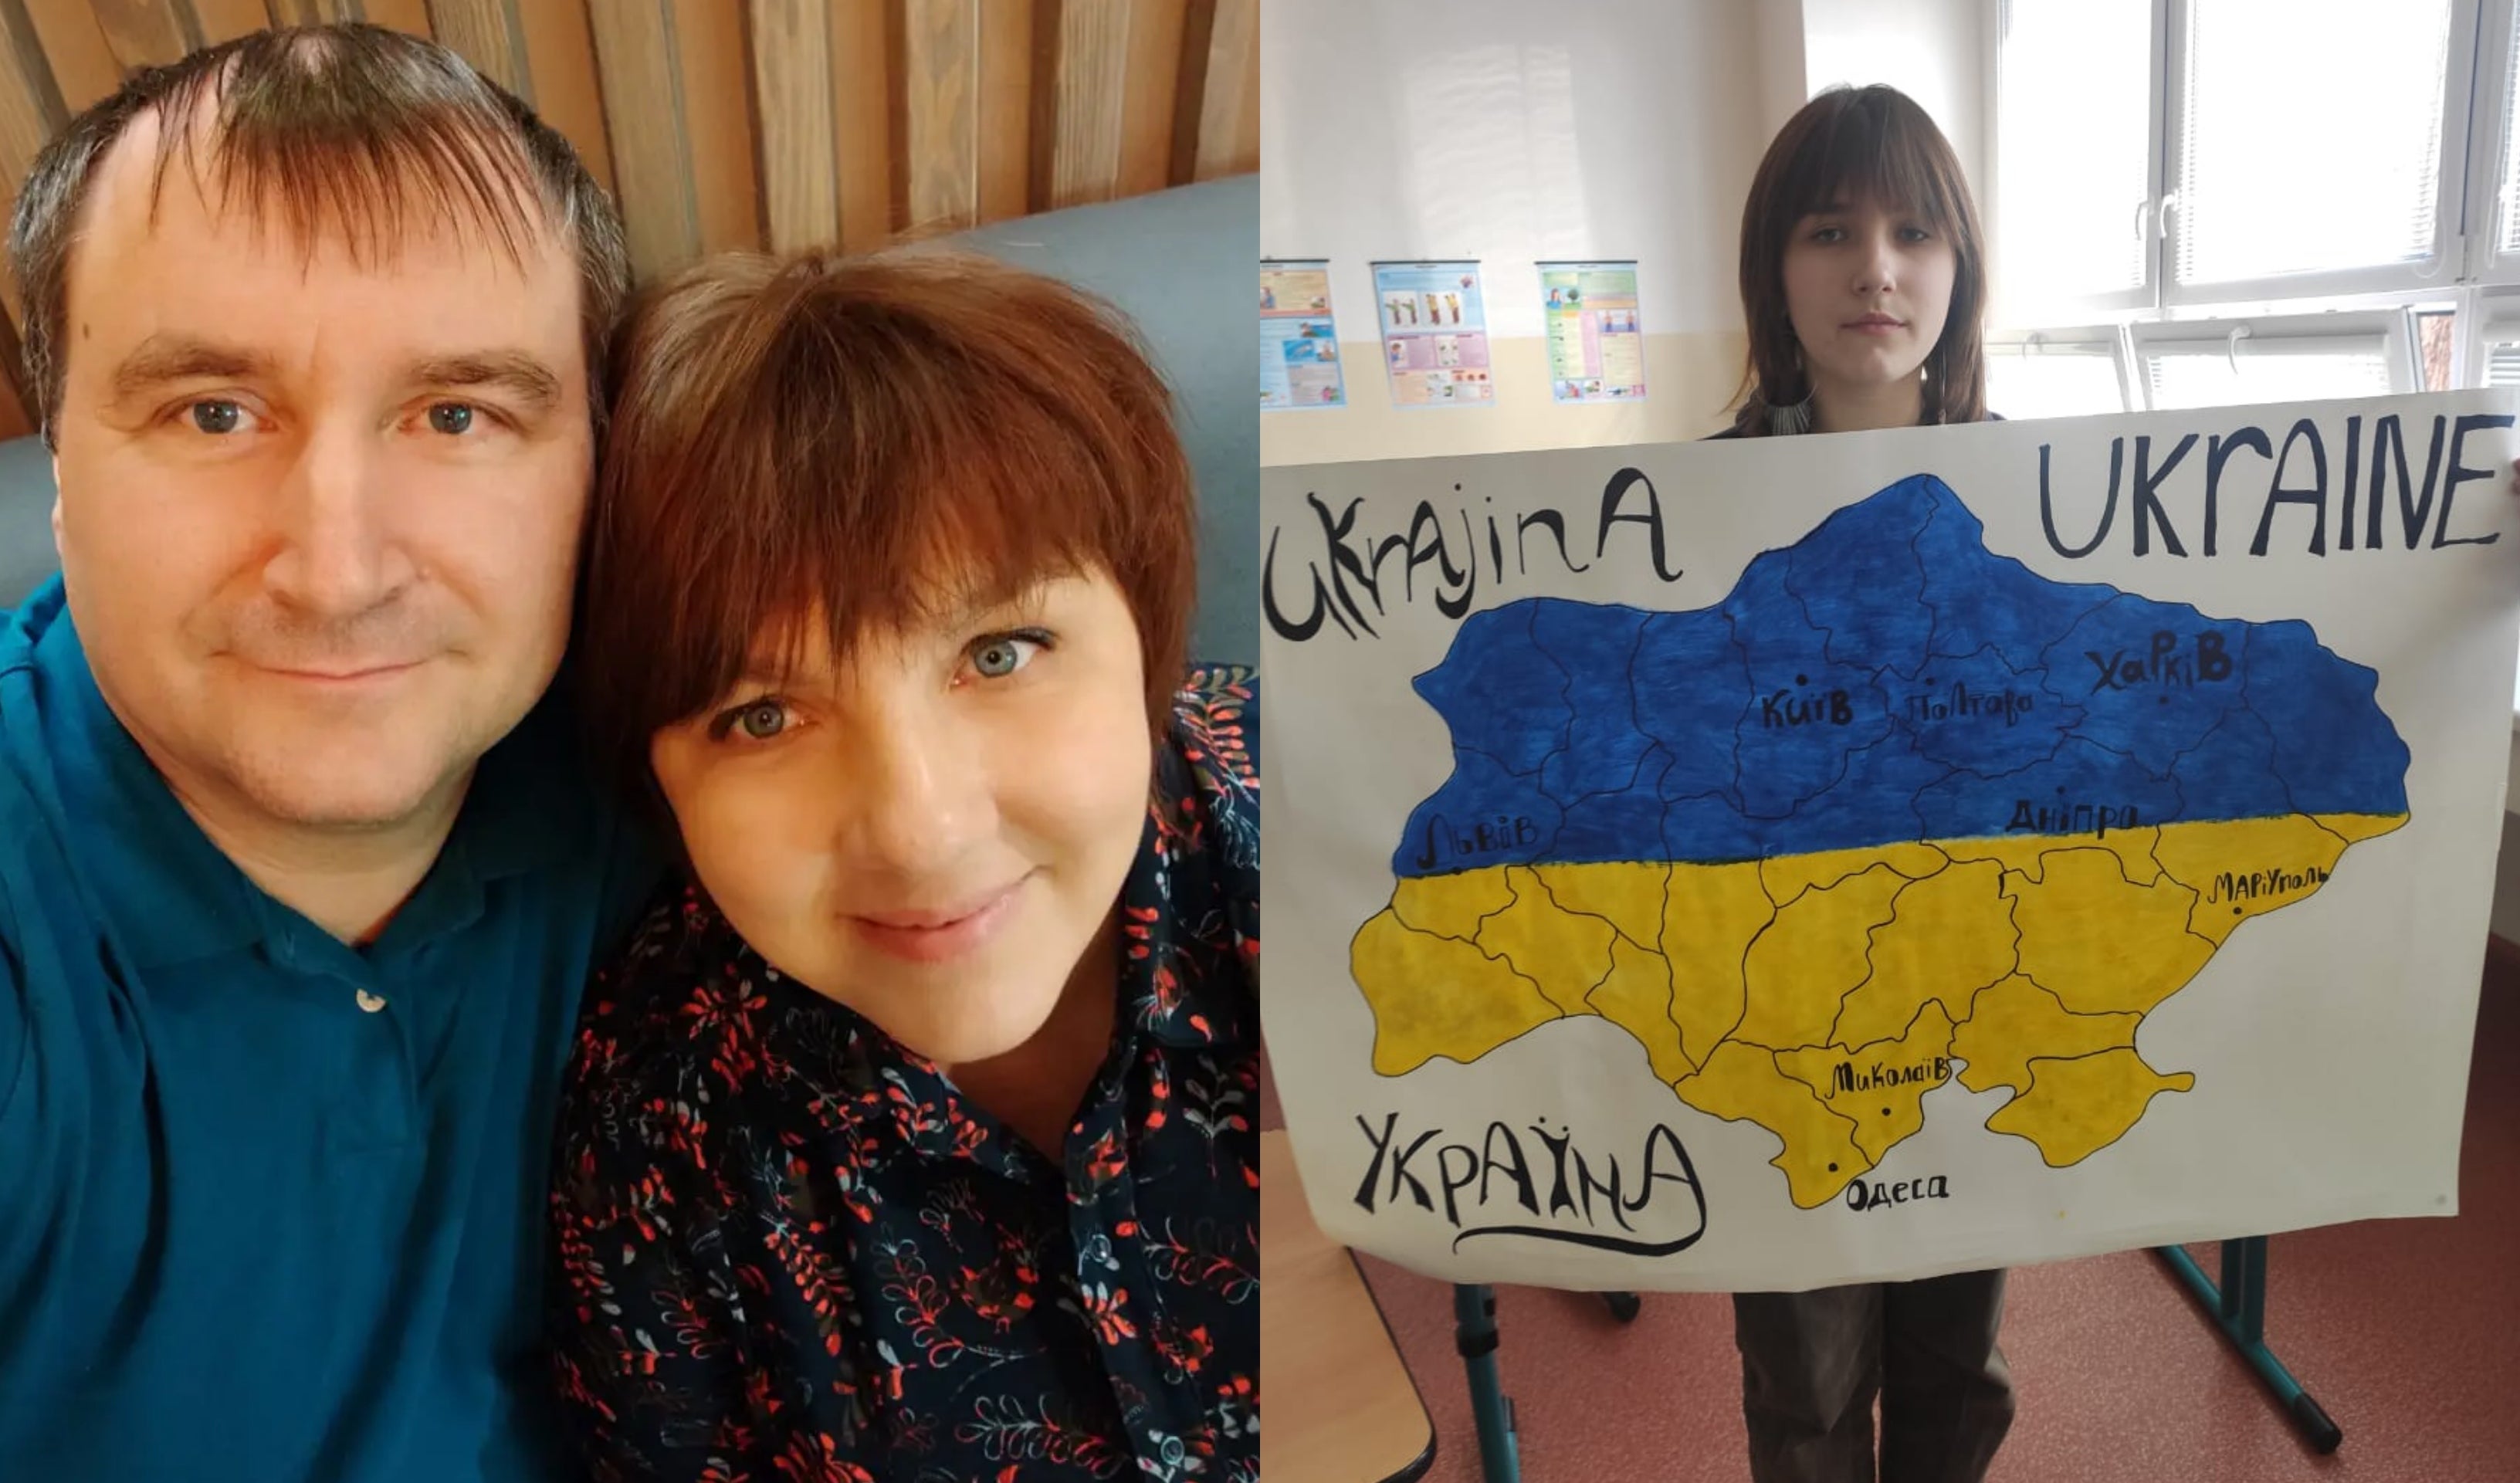 Luda Sviridok and her husband Sergey (right) and her nine-year-old daughter who painted a map of Ukraine for the classroom. (Luda Sviridok/PA)